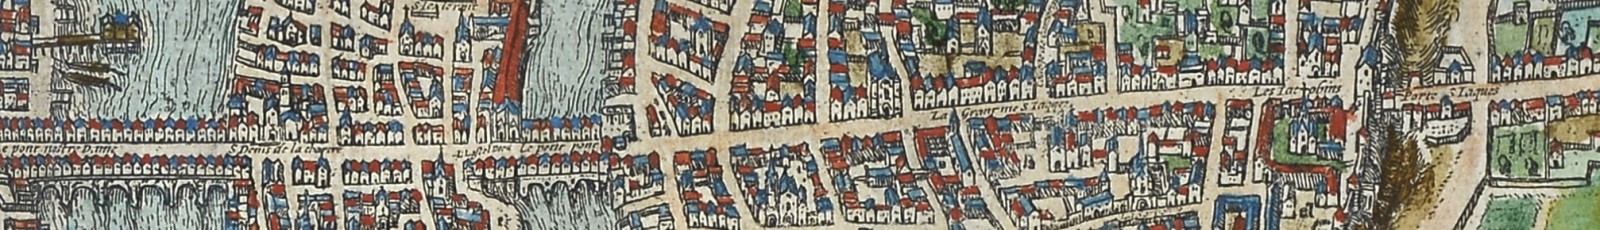 Plan de Paris par Georg Braun, c. 1530. Bibliothèque Mazarine, 2°4878K Res 2